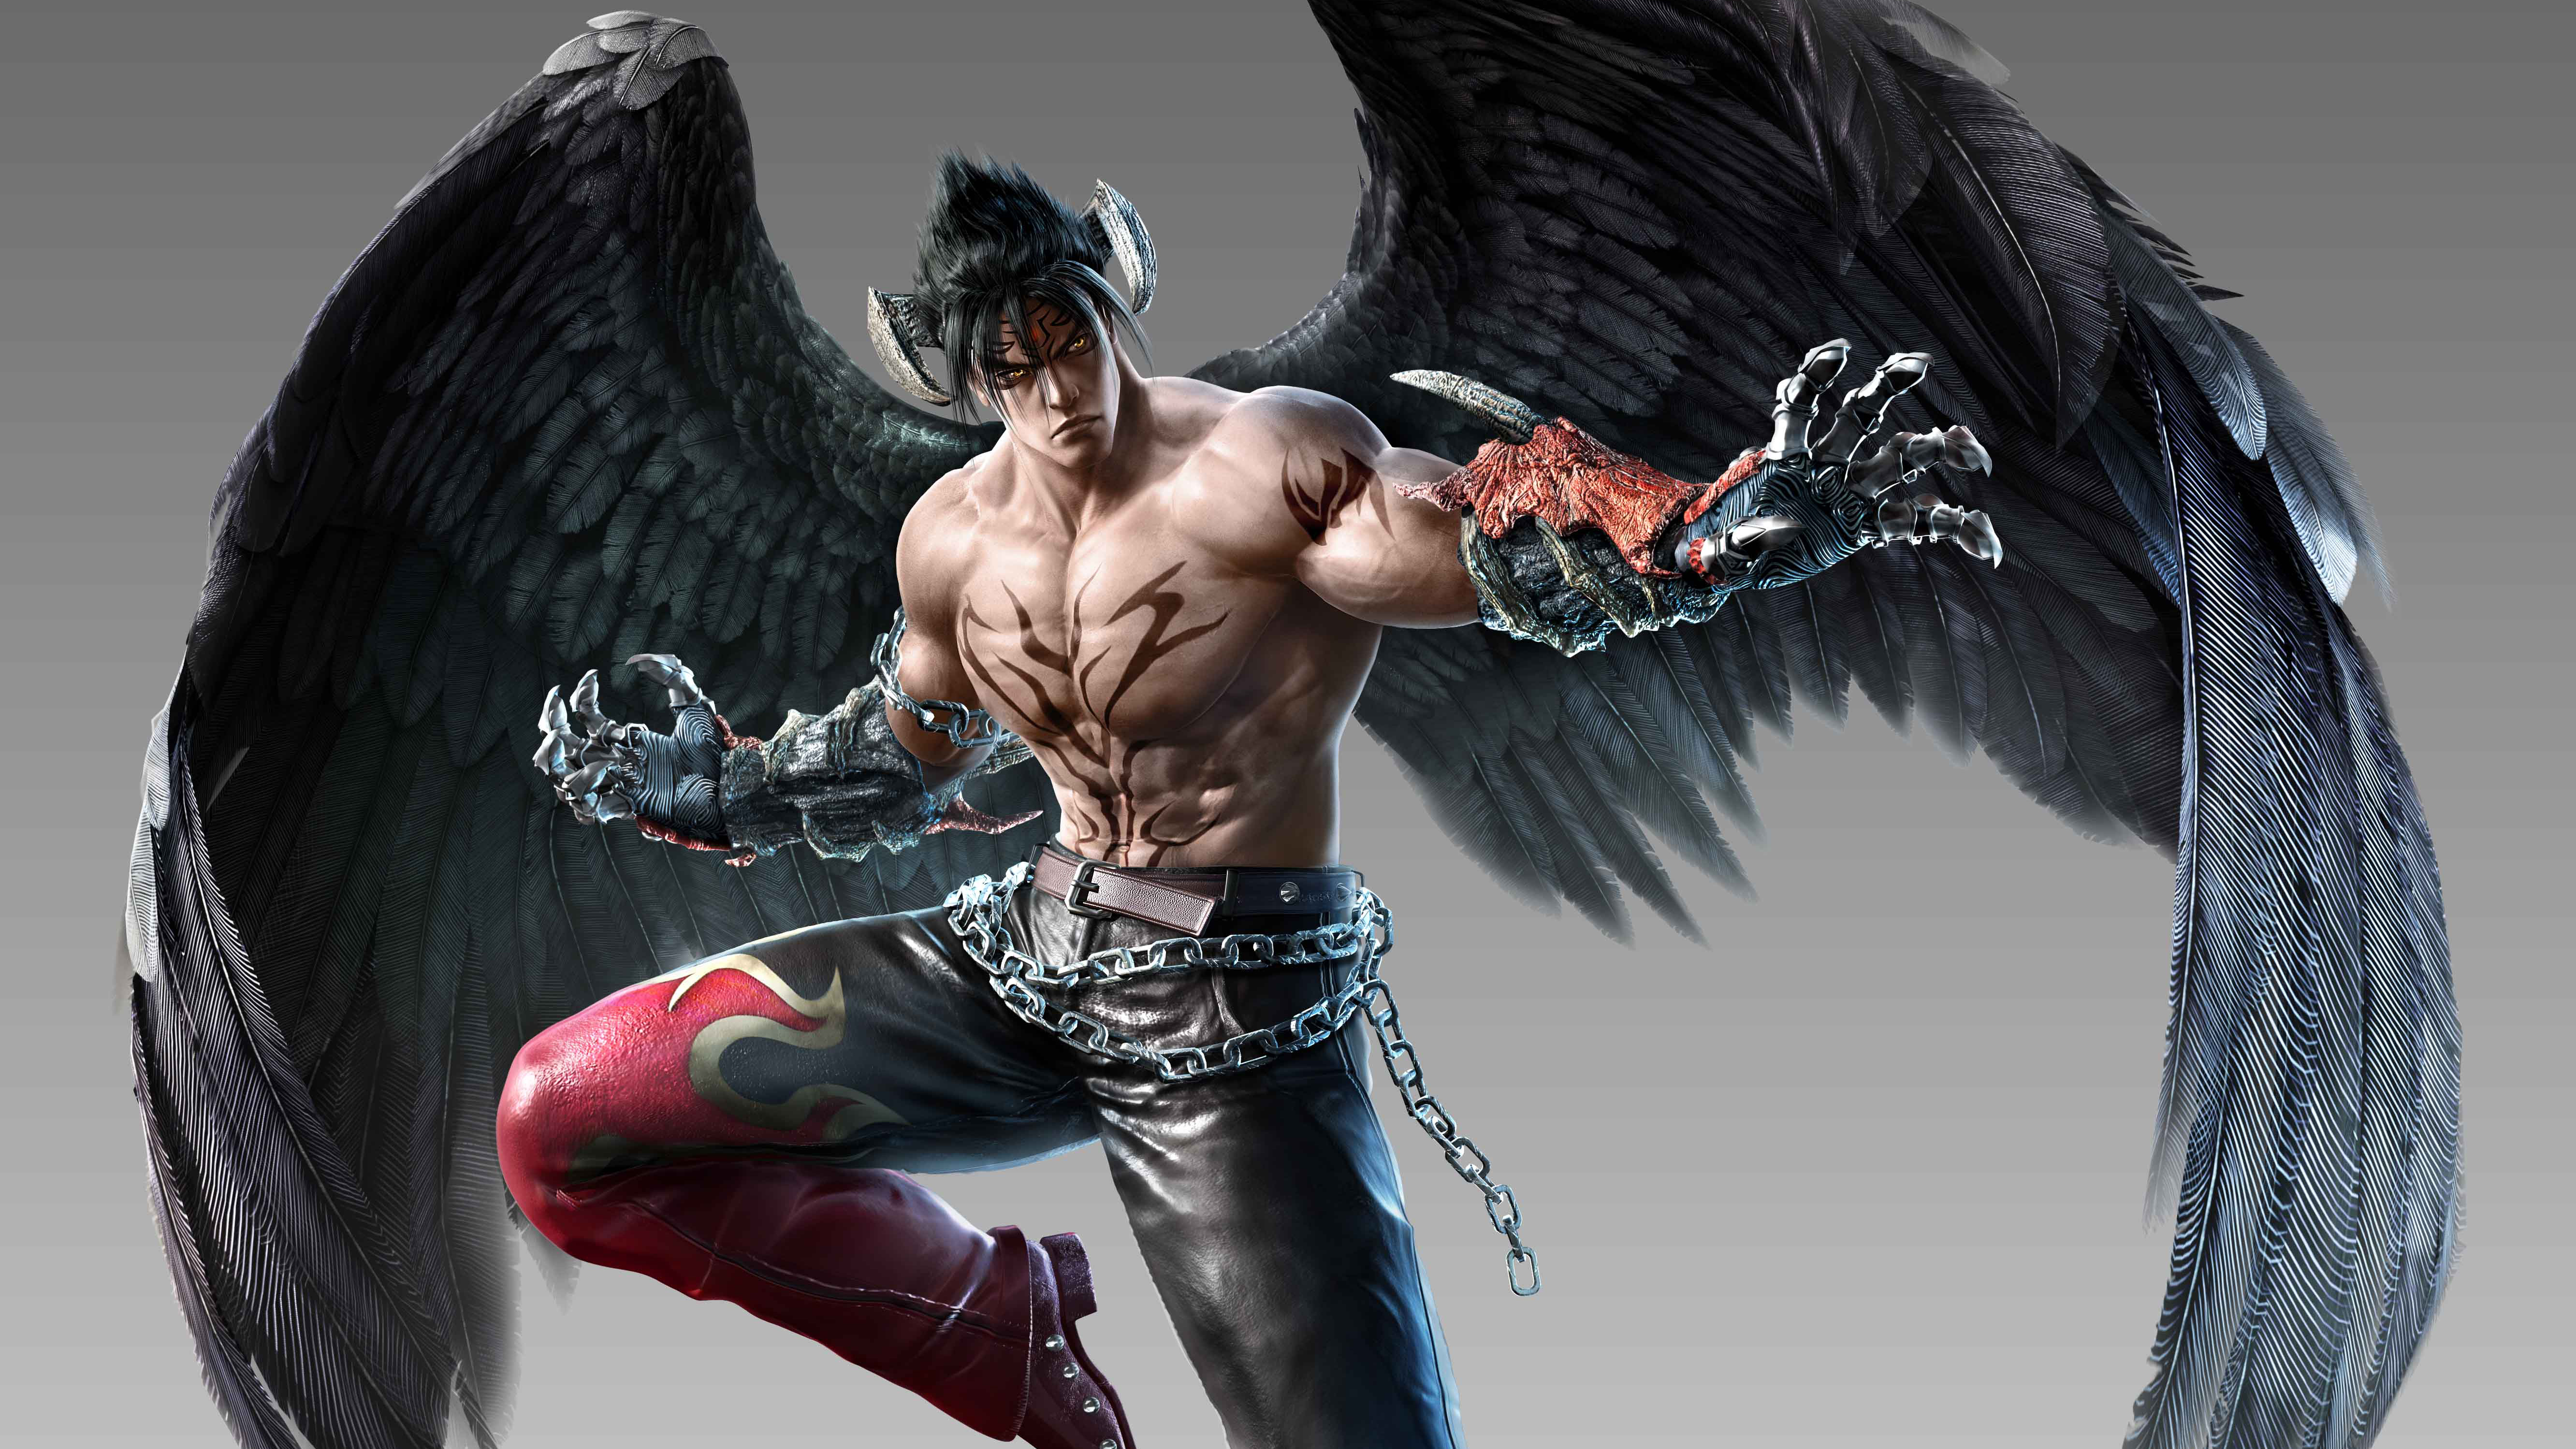 Jin Kazama Tekken 7 5k, HD Games, 4k Wallpapers, Images, Backgrounds,  Photos and Pictures